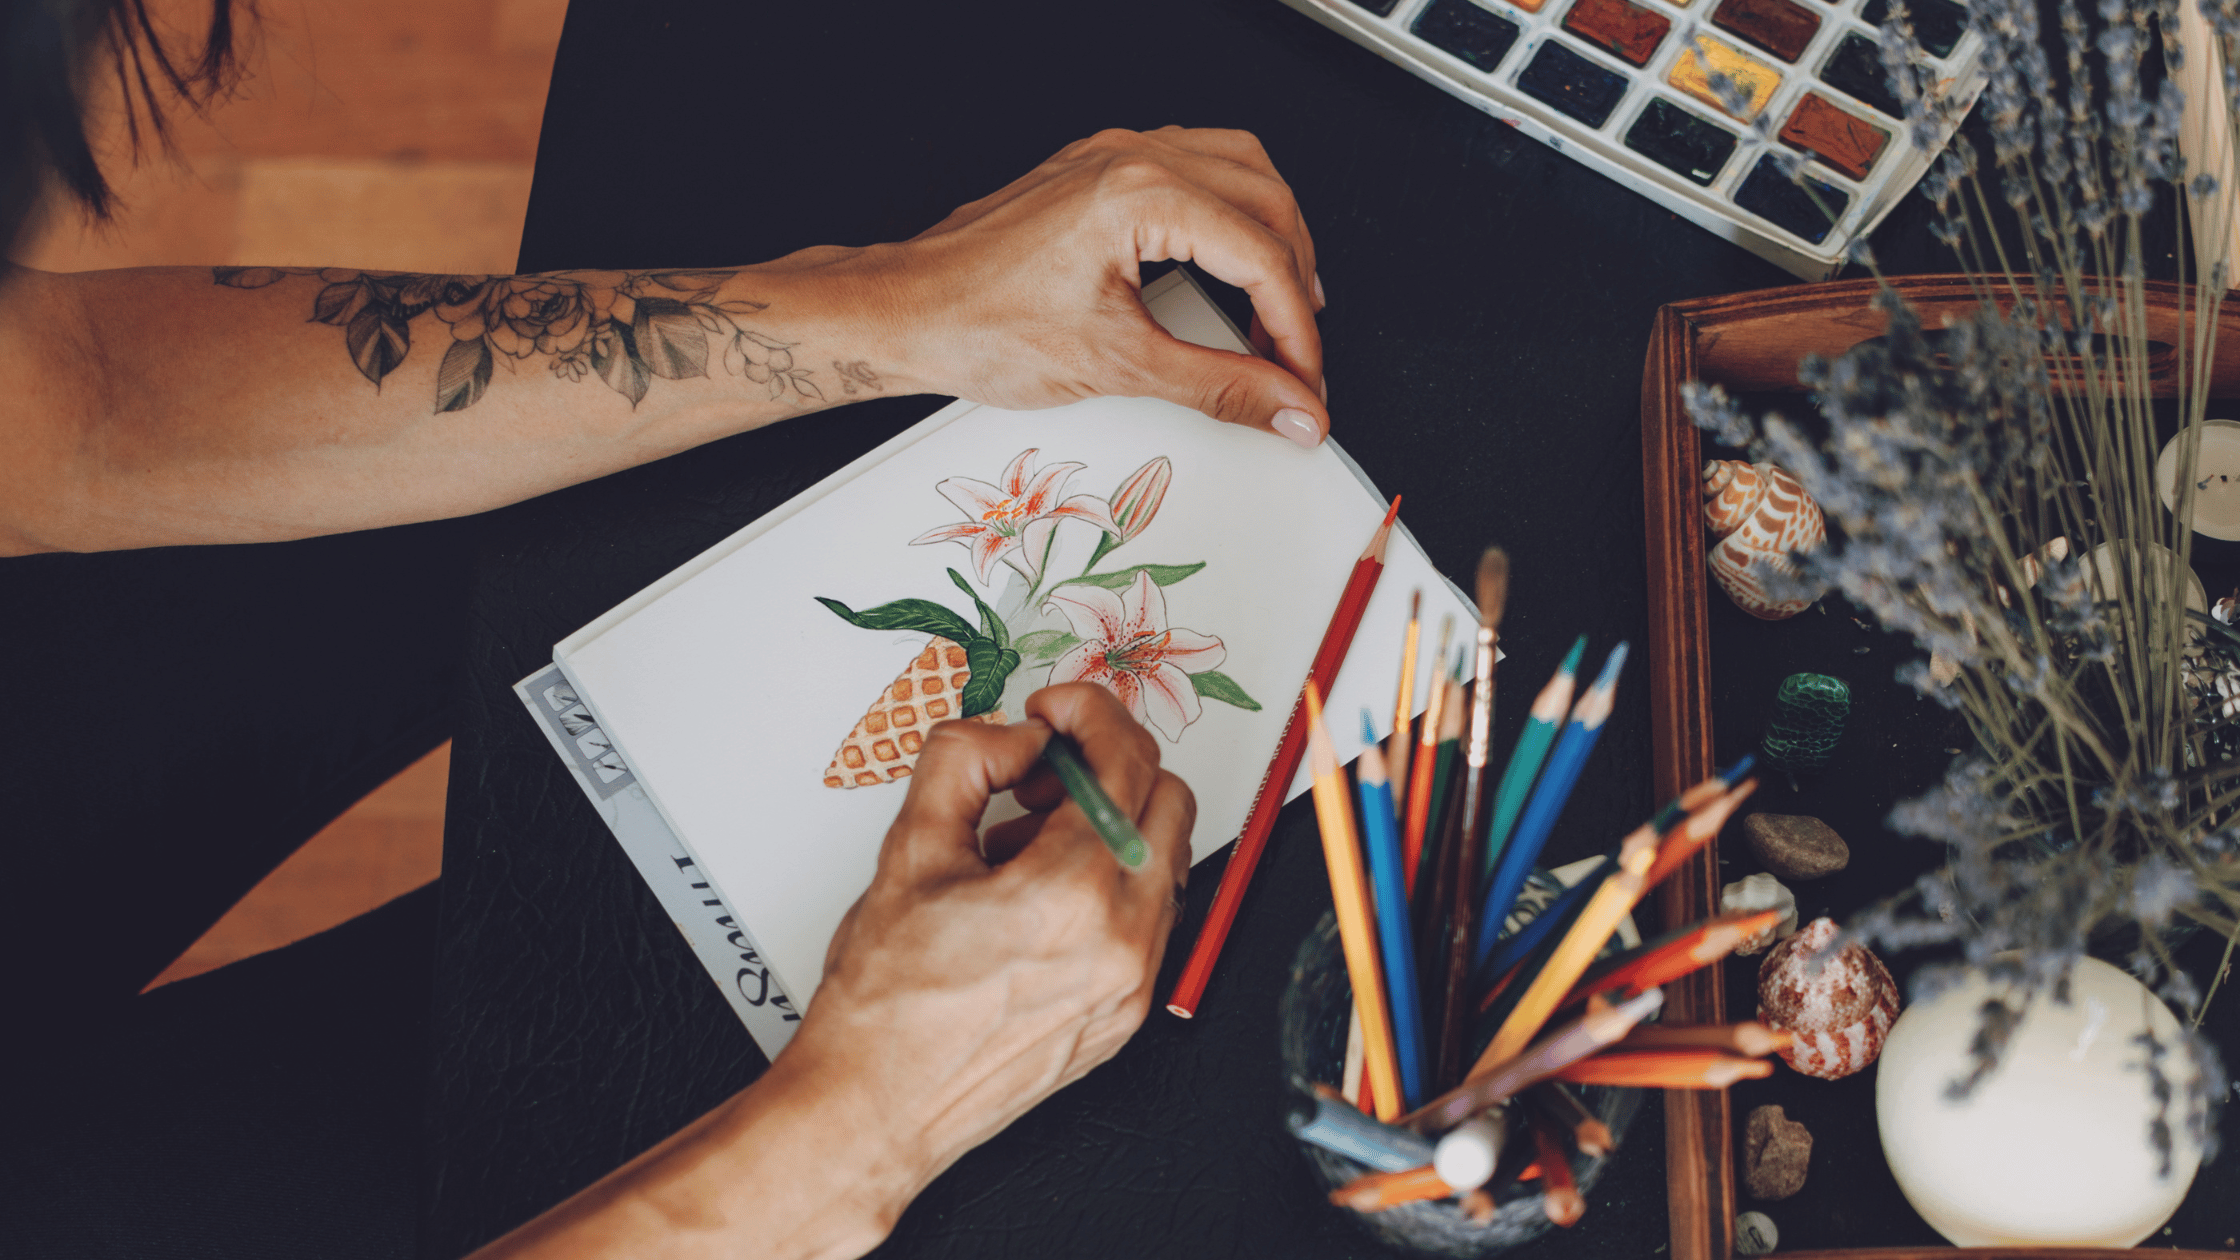 Tattoo Sketchbook for Tattoo Artists: 8 inch x 10 inch, Body Art Sketch  notebook for Tattoo Designs and Development (Paperback)